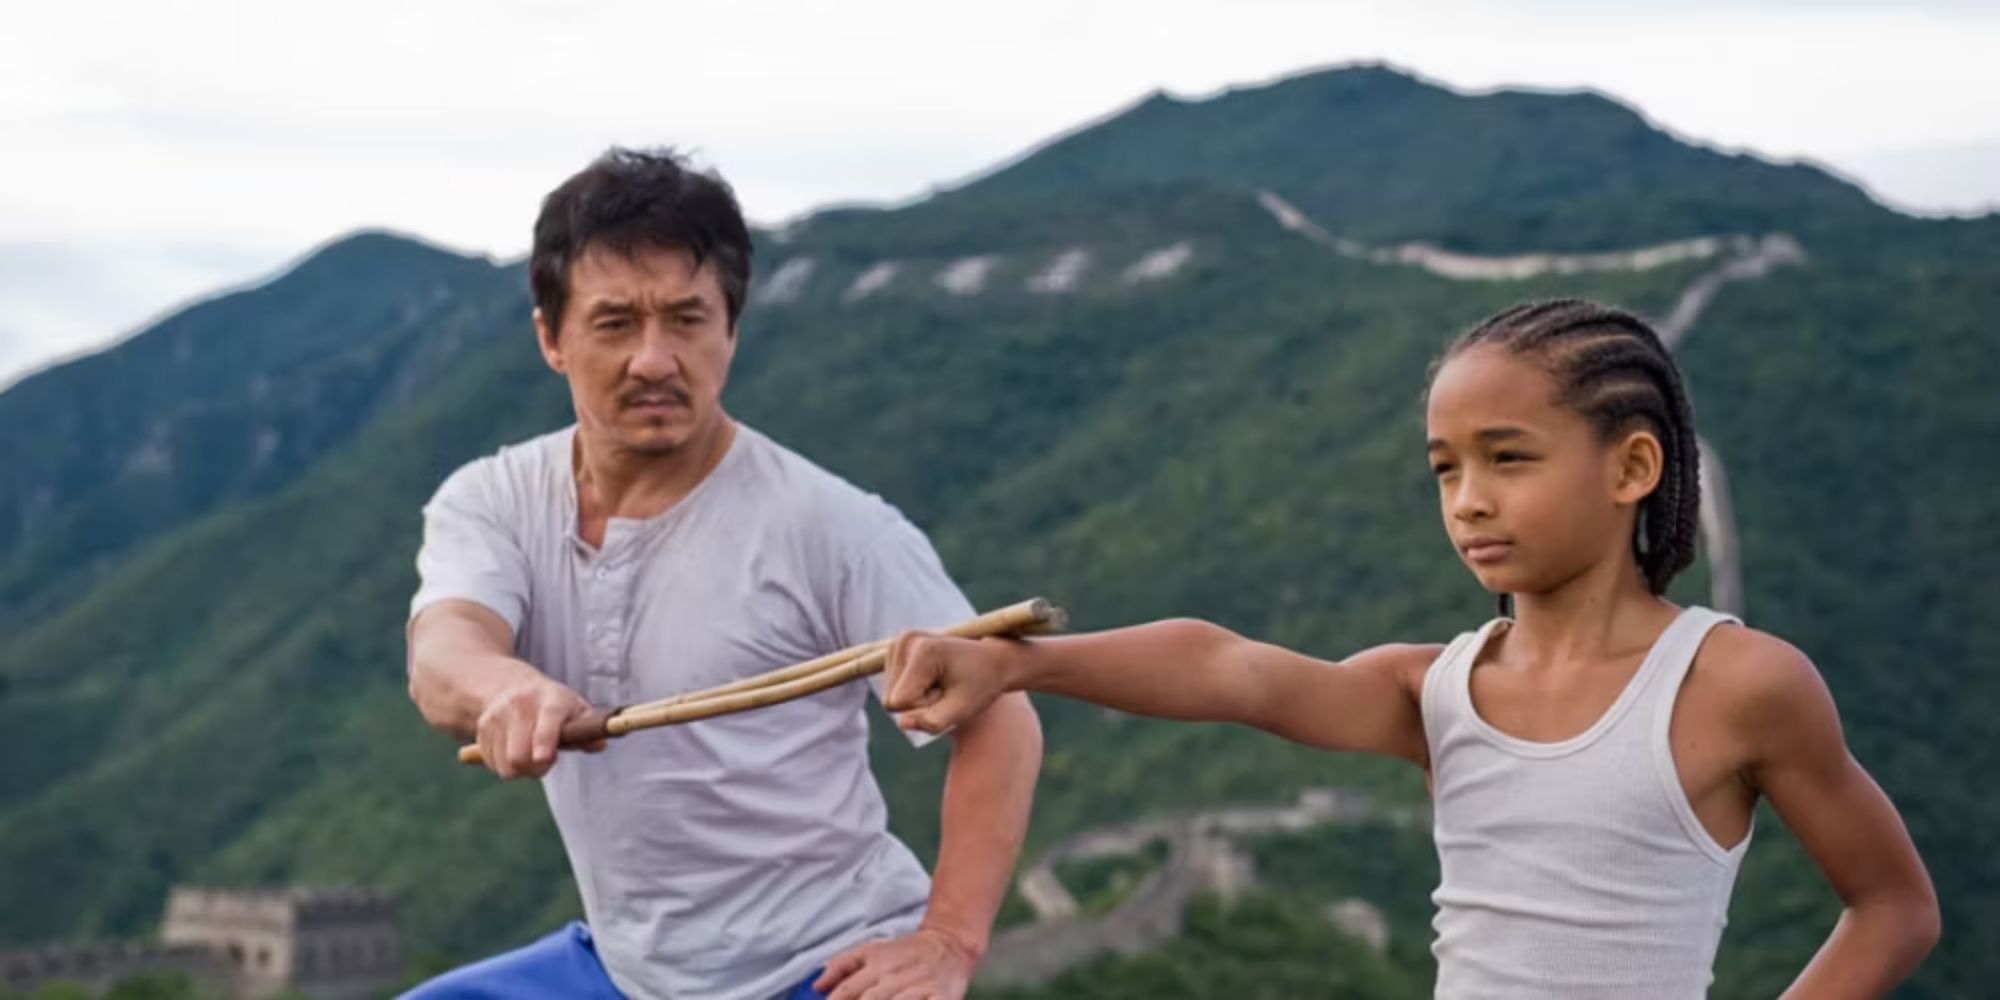 Jackie Chan as Mr. Han, training Jaden Smith as Dre in The Karate Kid